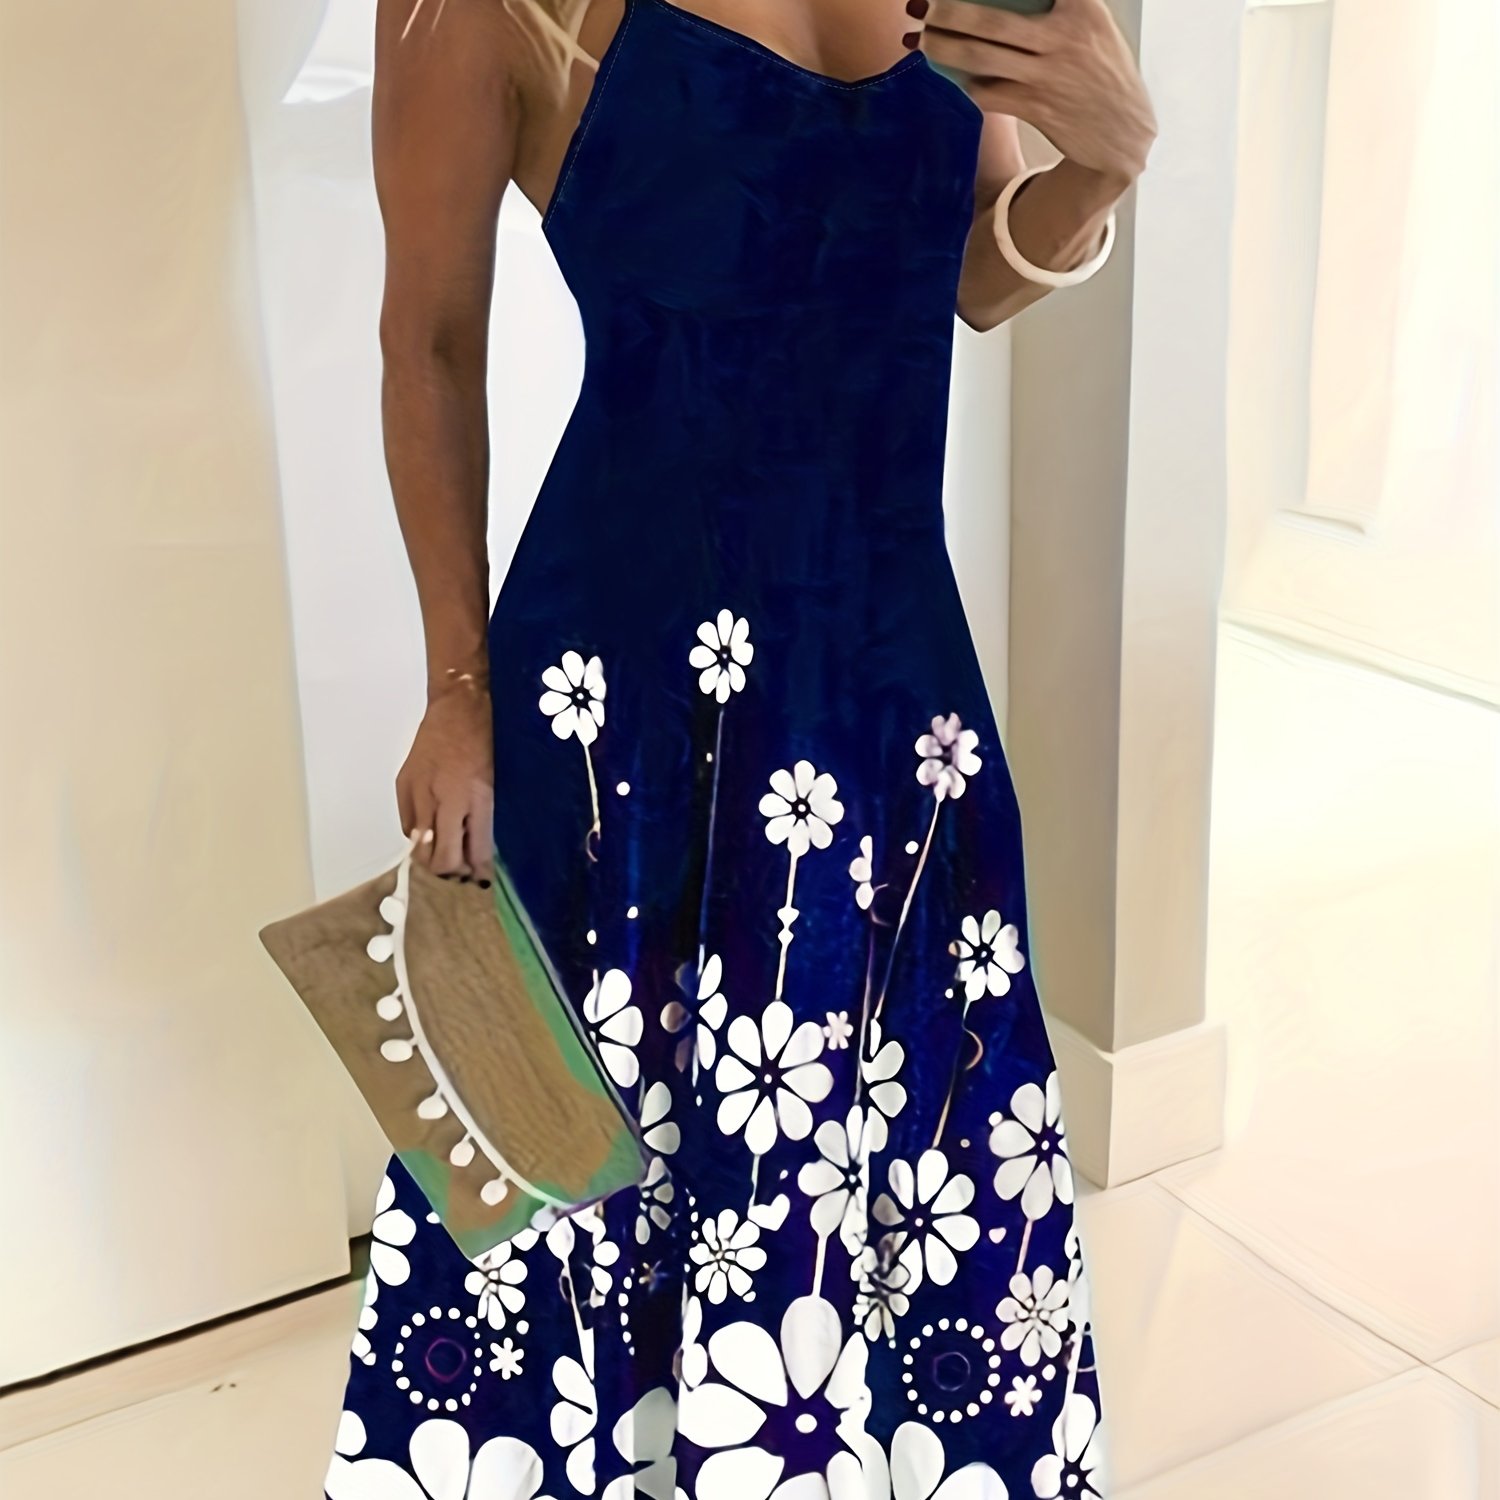 floral print spaghetti dress casual sleeveless summer maxi dress womens clothing